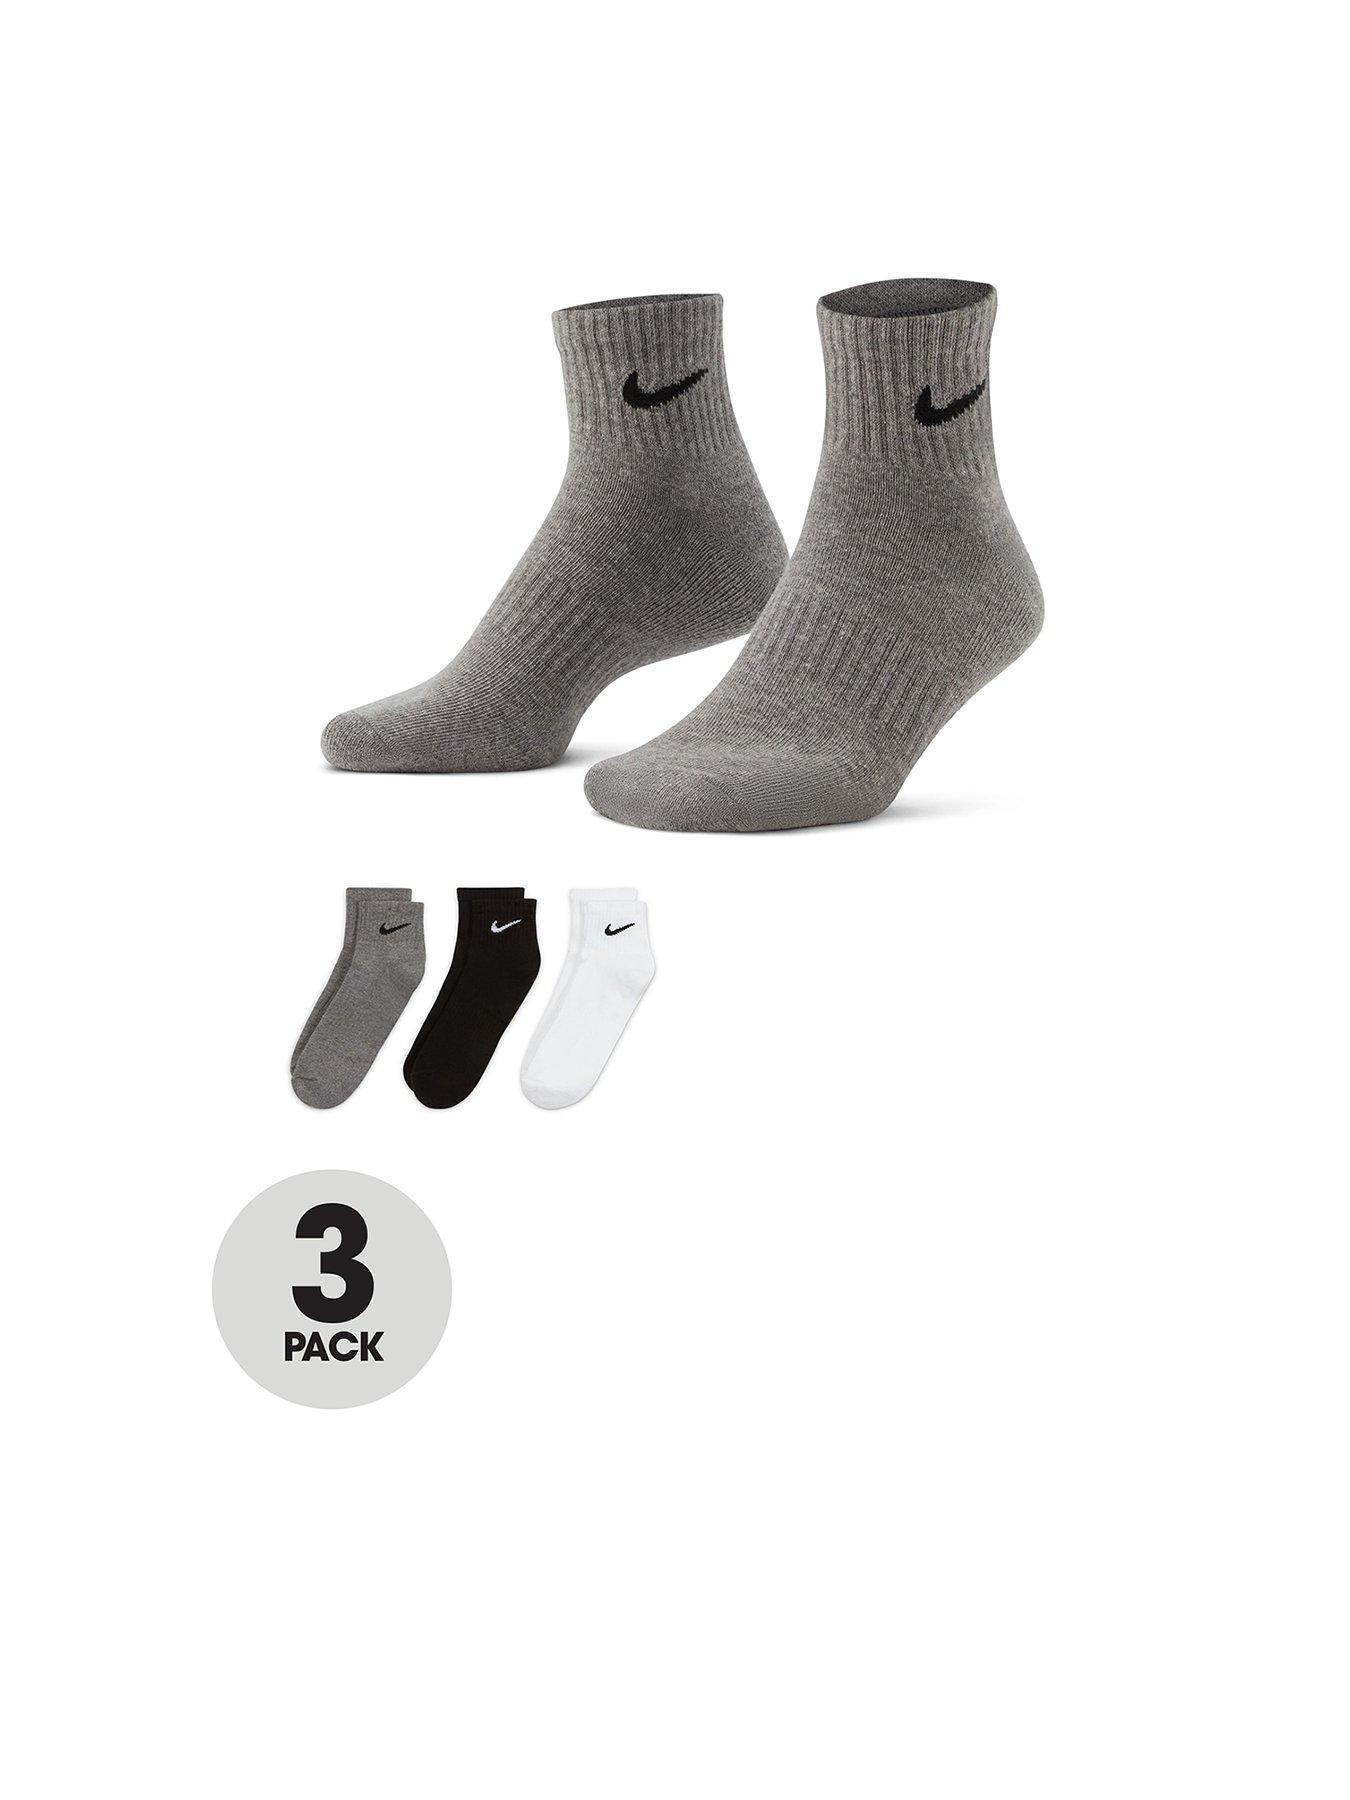 Nike Train Everyday Cushioned Ankle Socks | very.co.uk